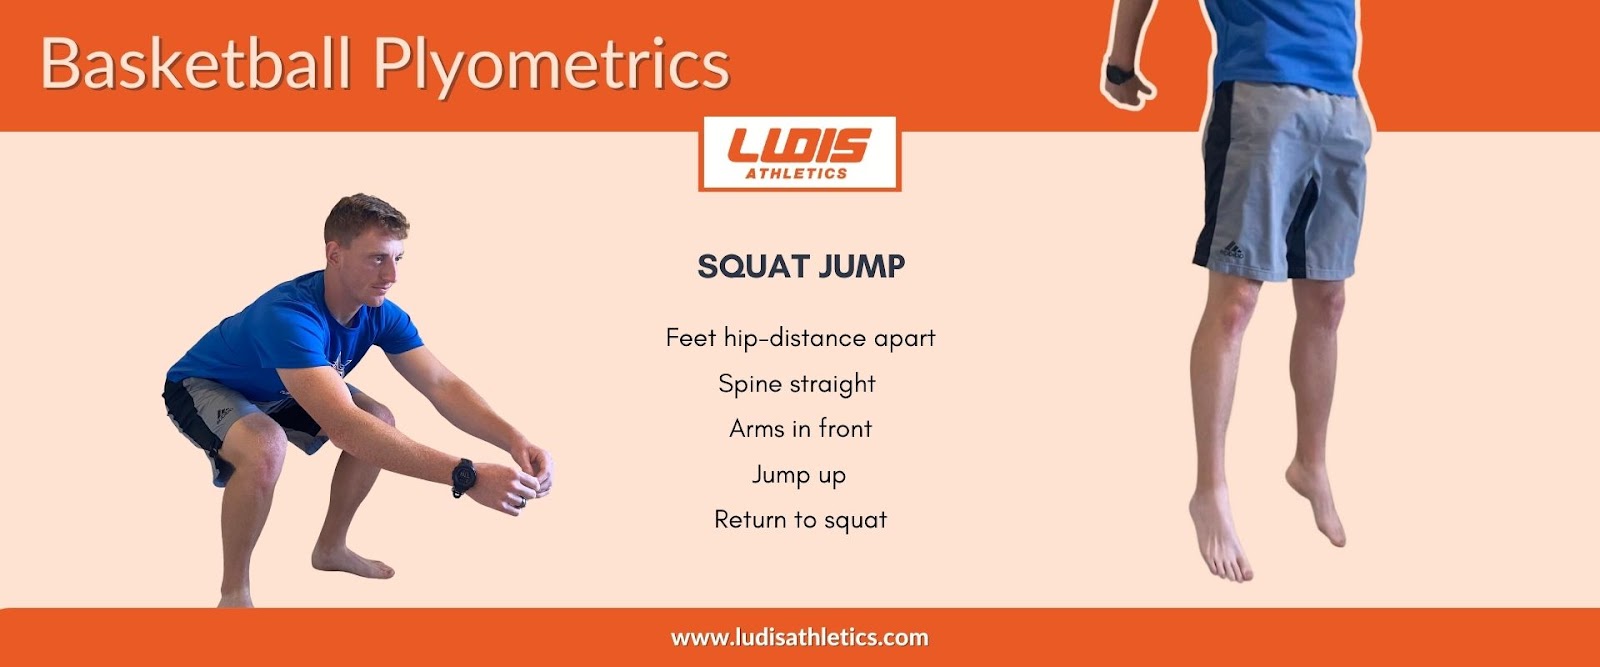 Basketball Plyometrics Squat Jump Ludis Athletics
